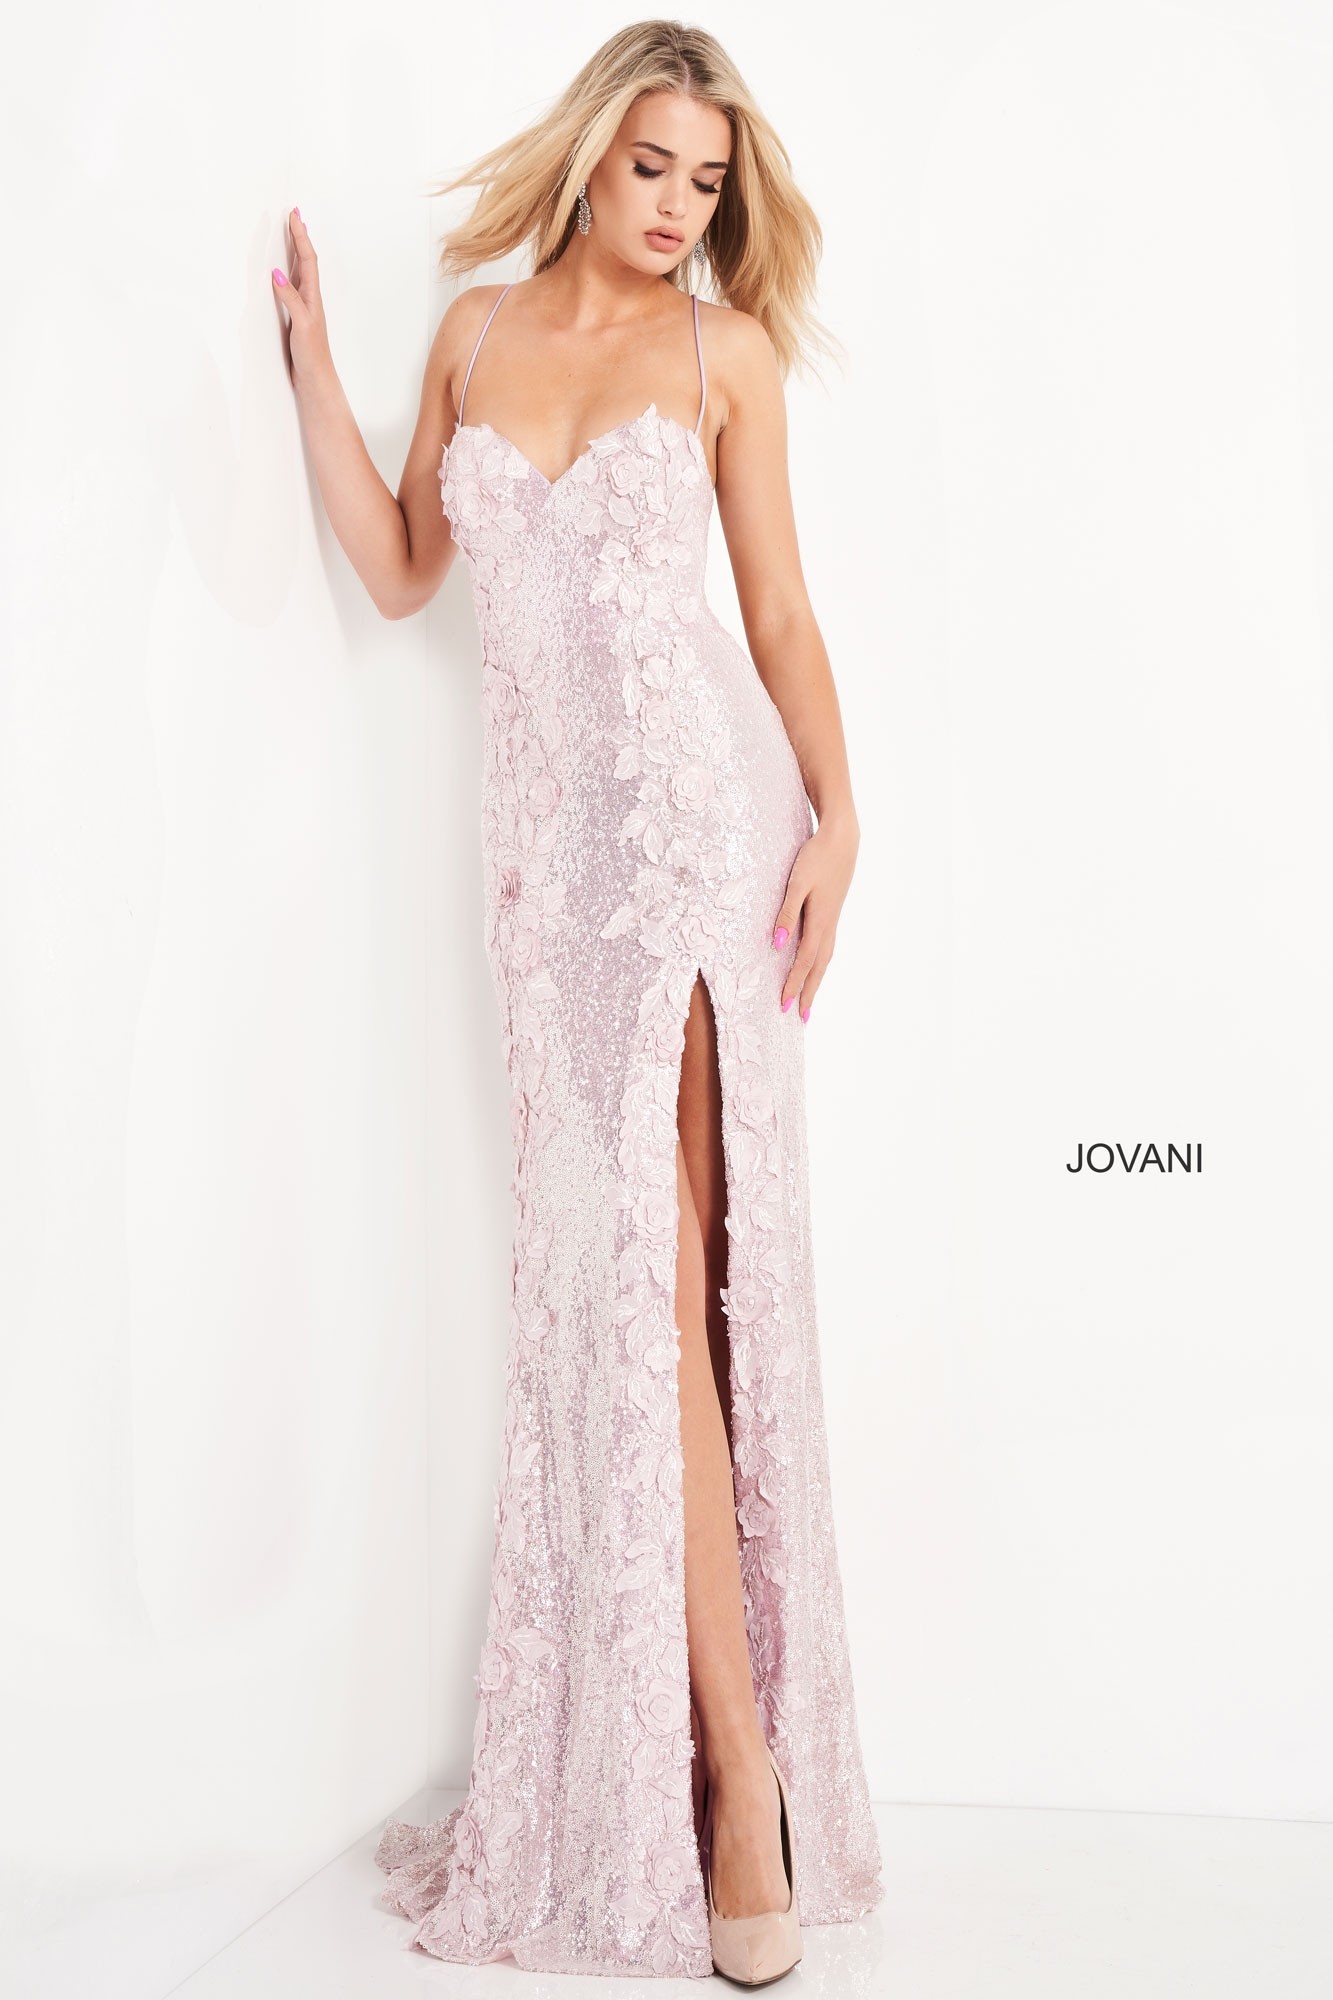 Jovani 06109 Sequin Floral Prom Dress | RissyRoos.com